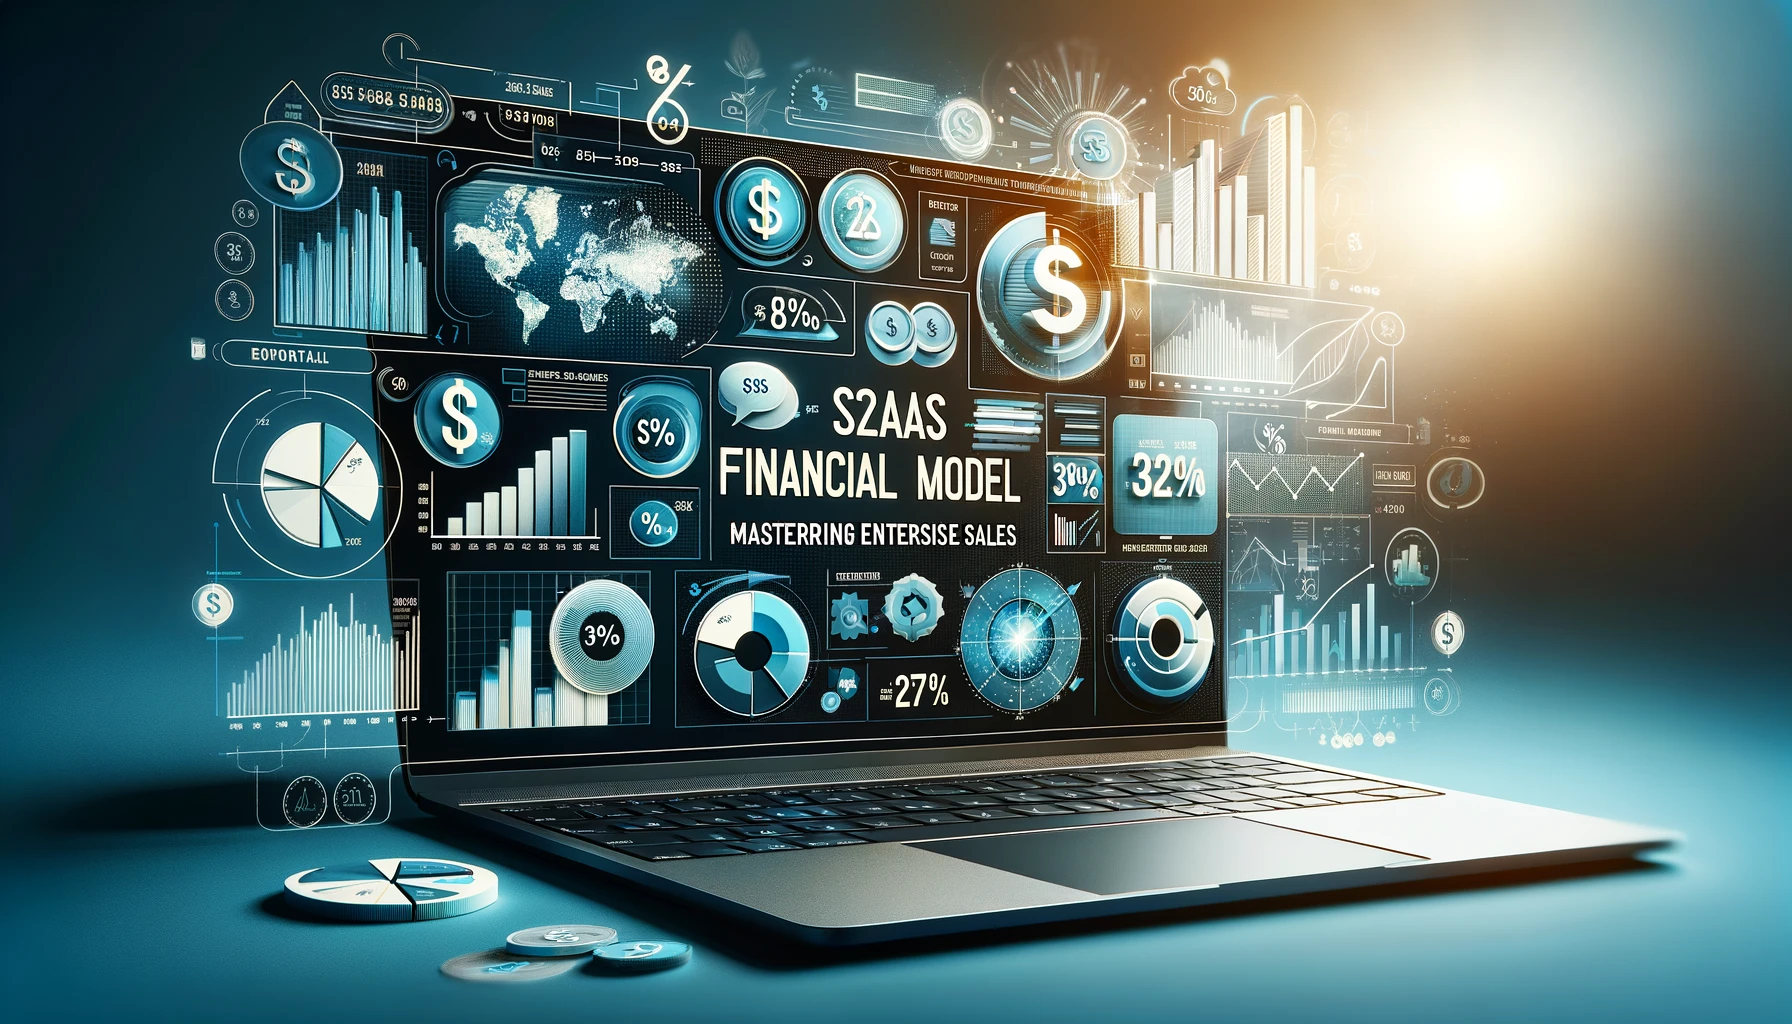 B2B SaaS Financial Model